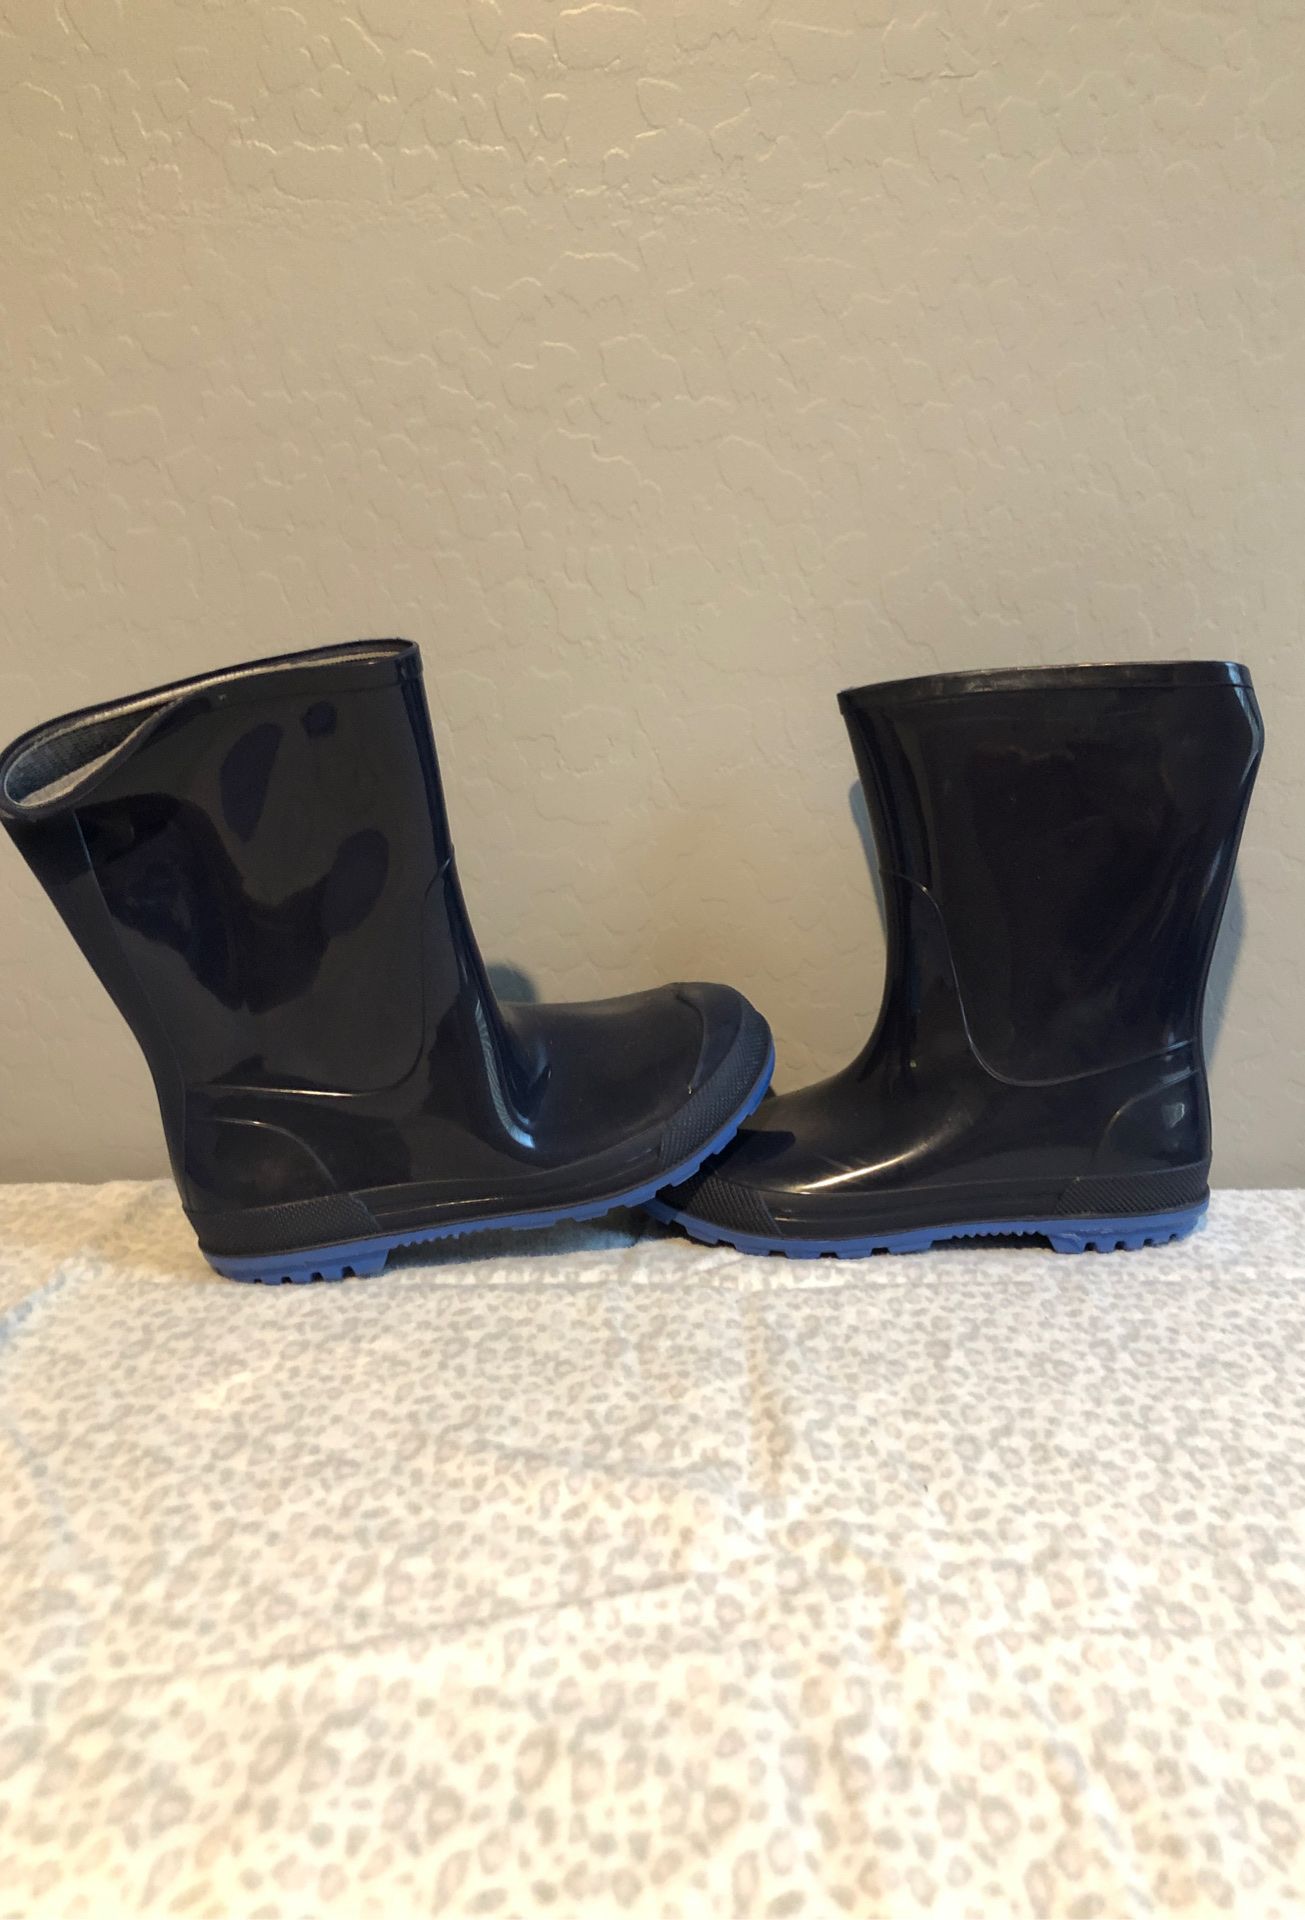 Boys/kids rain boots size 13-1